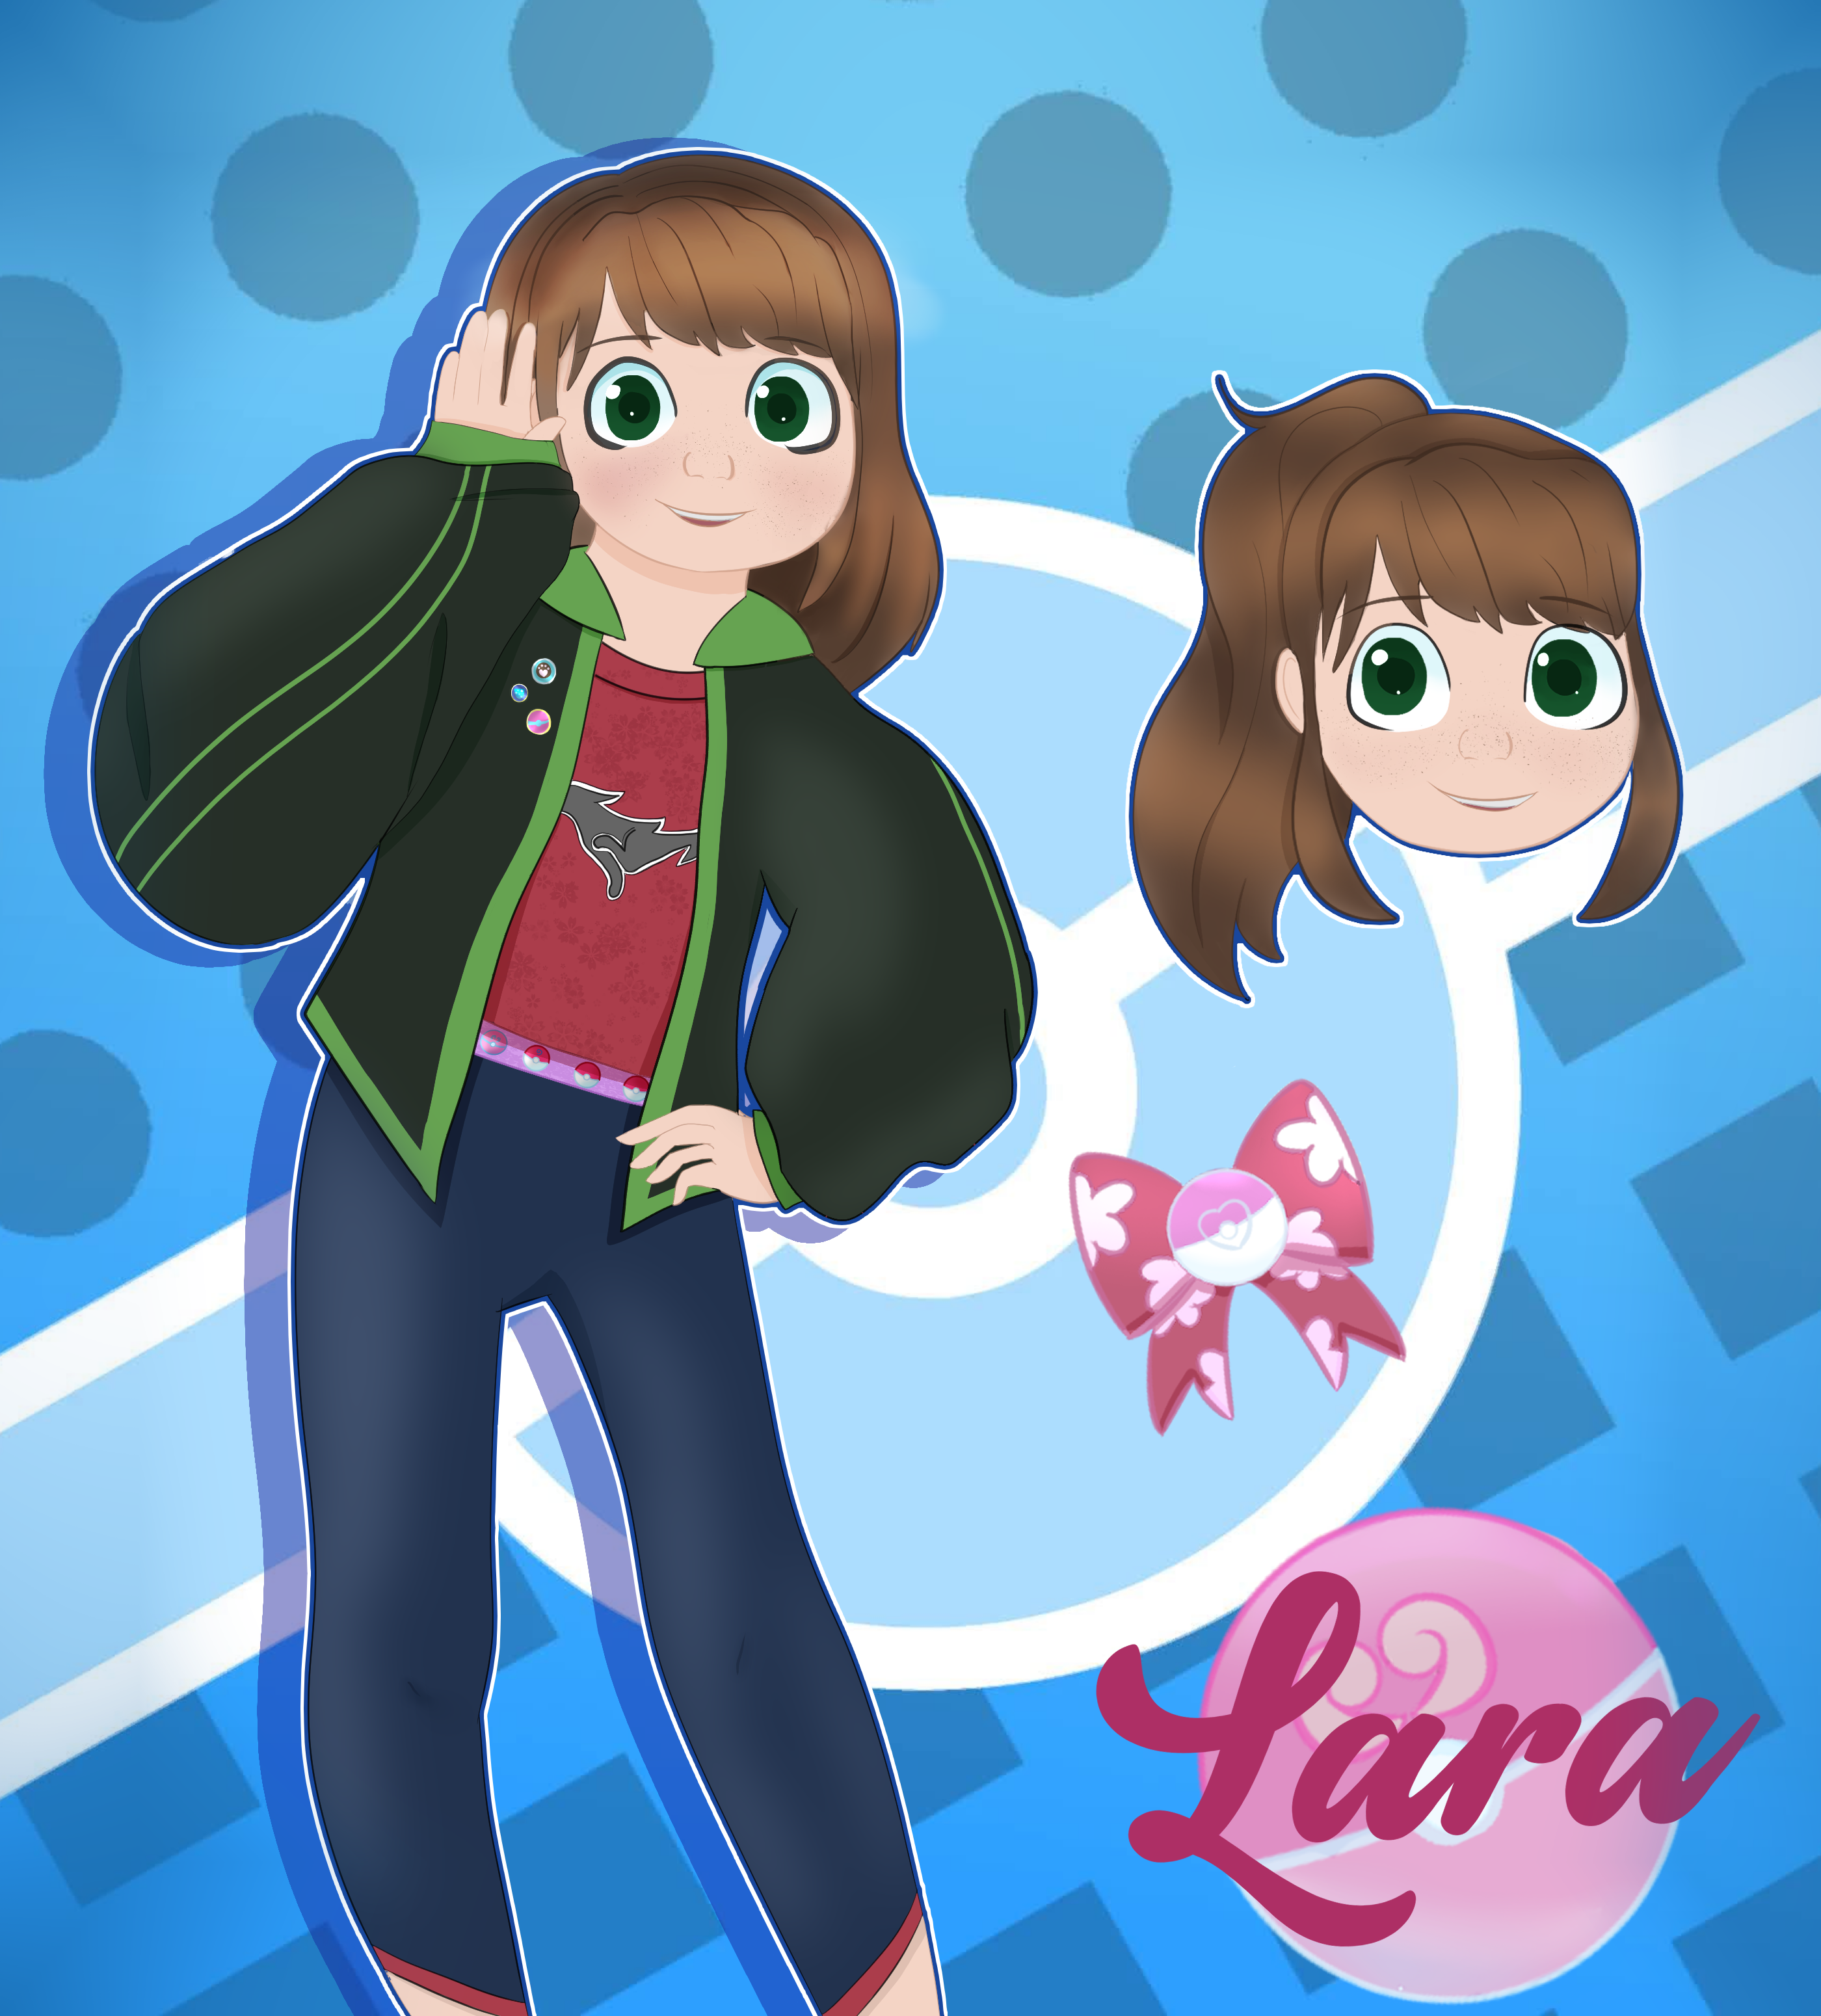 Lara (Oc Reference)